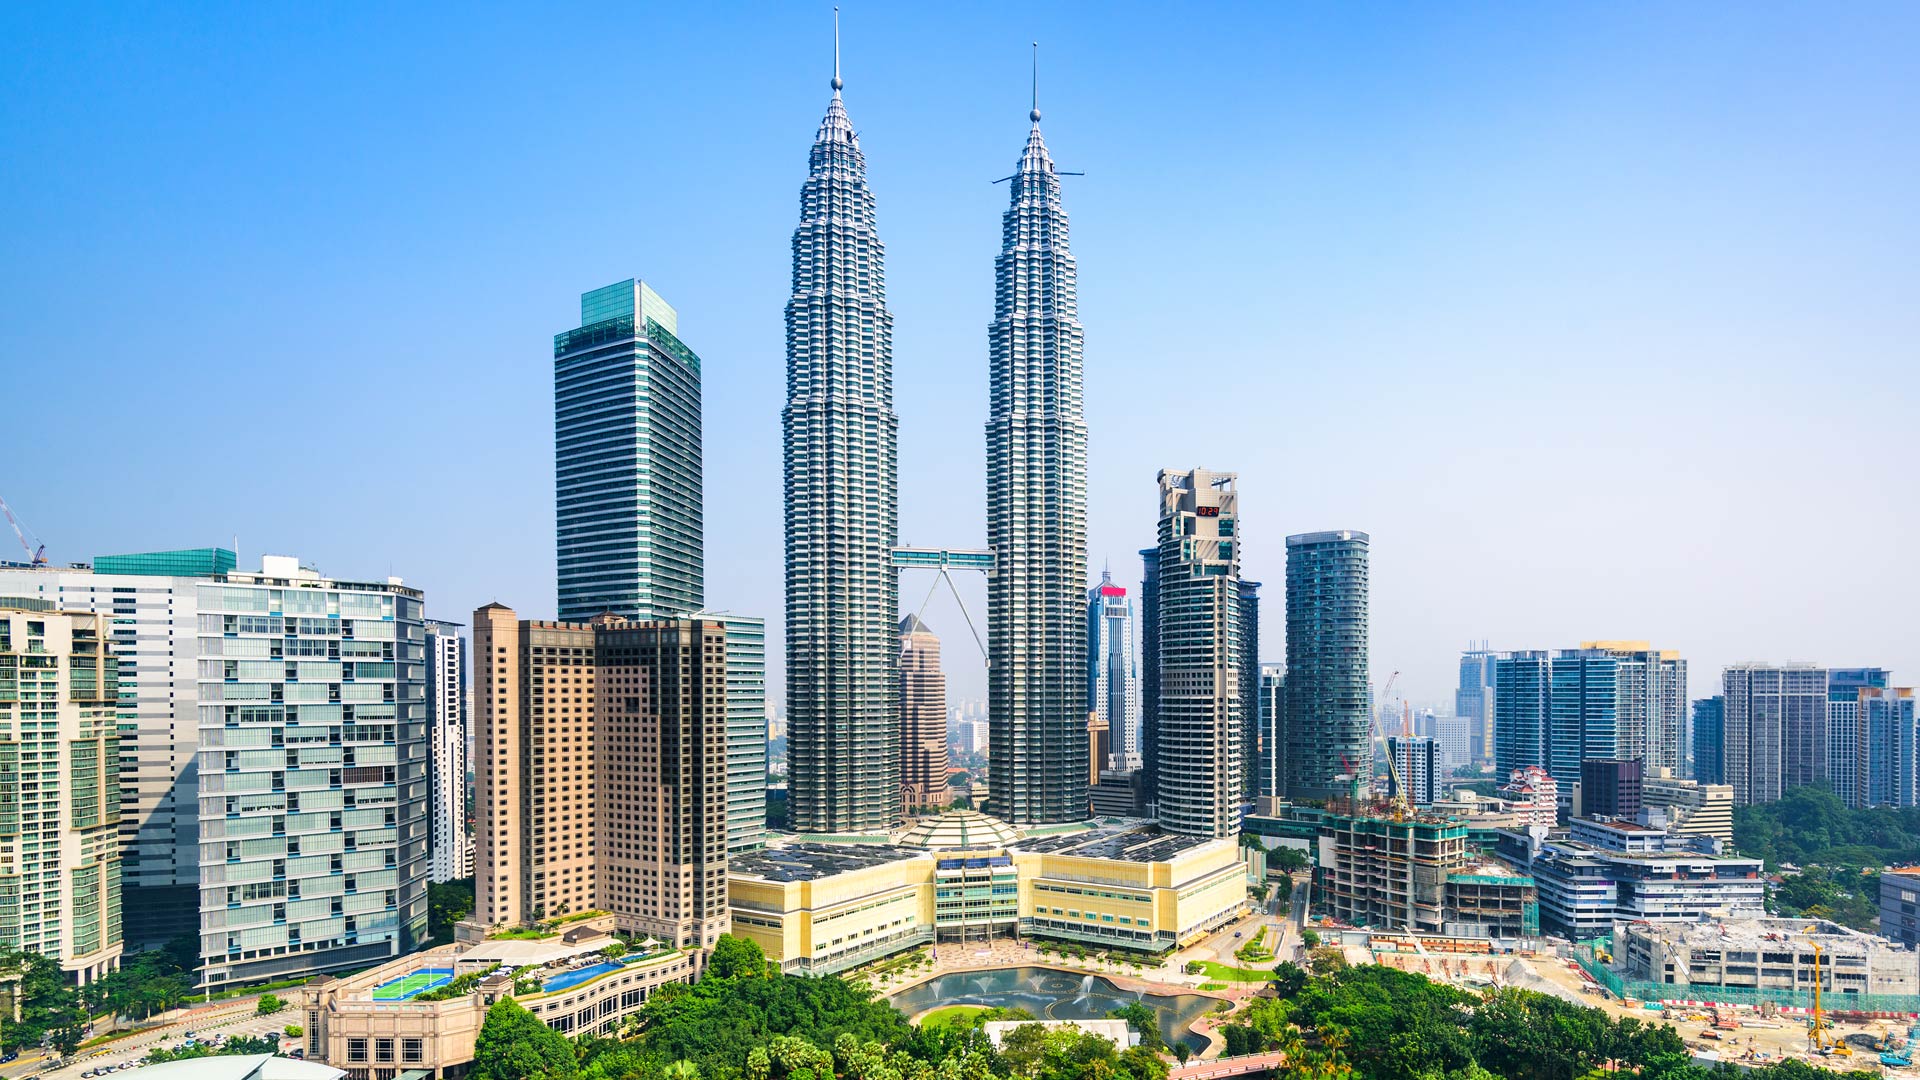 An image of the Petronas Towers Kuala Lumpur Malaysia